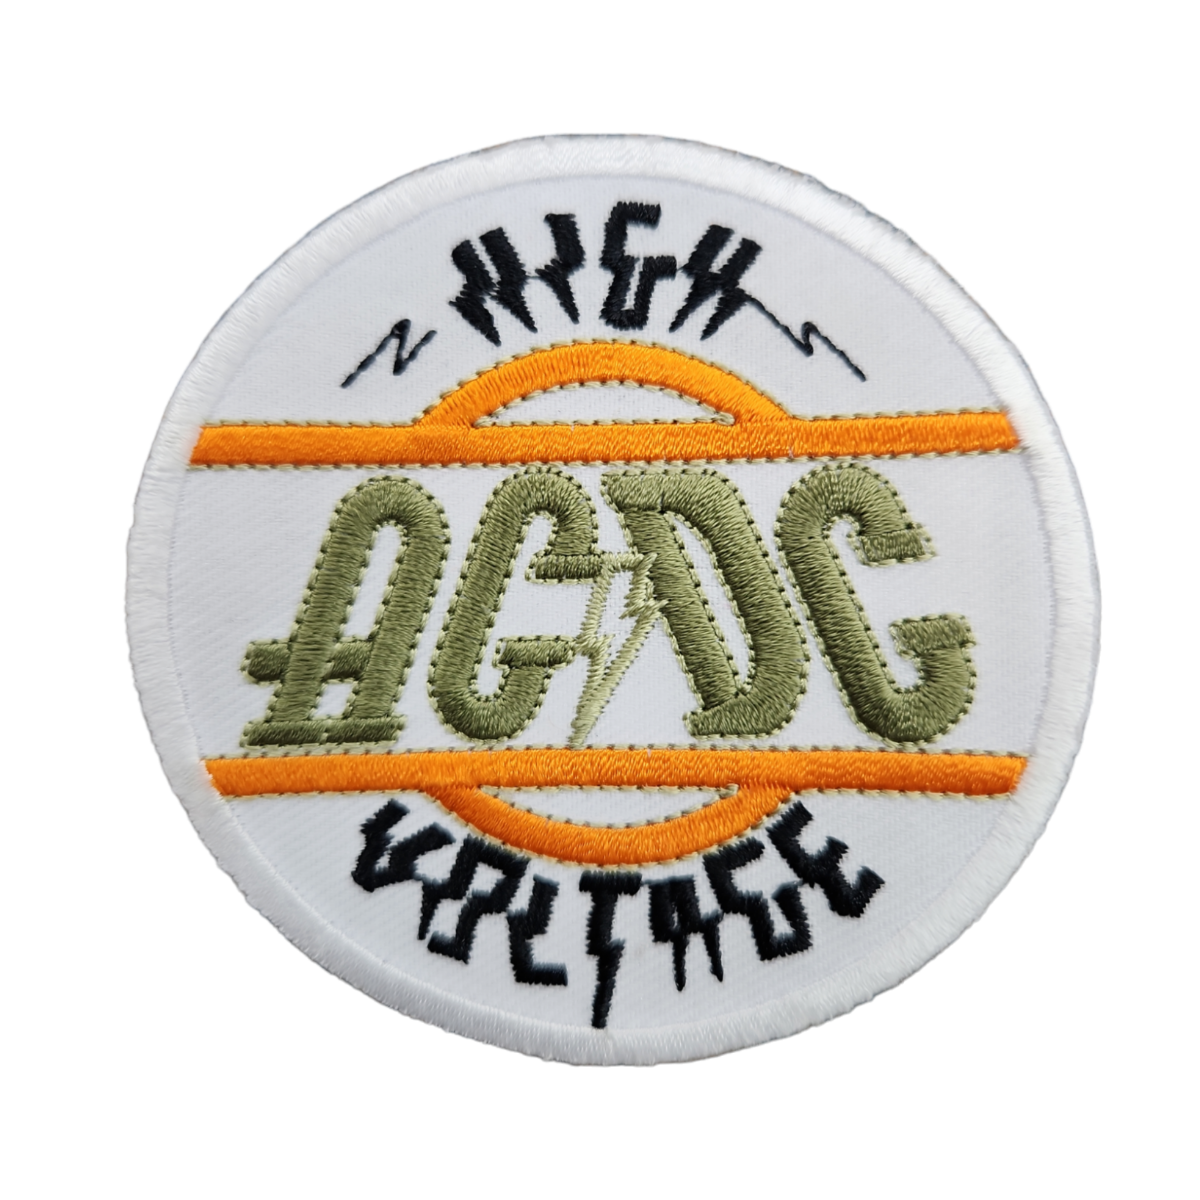 'High Voltage AC/DC' Logo Patch